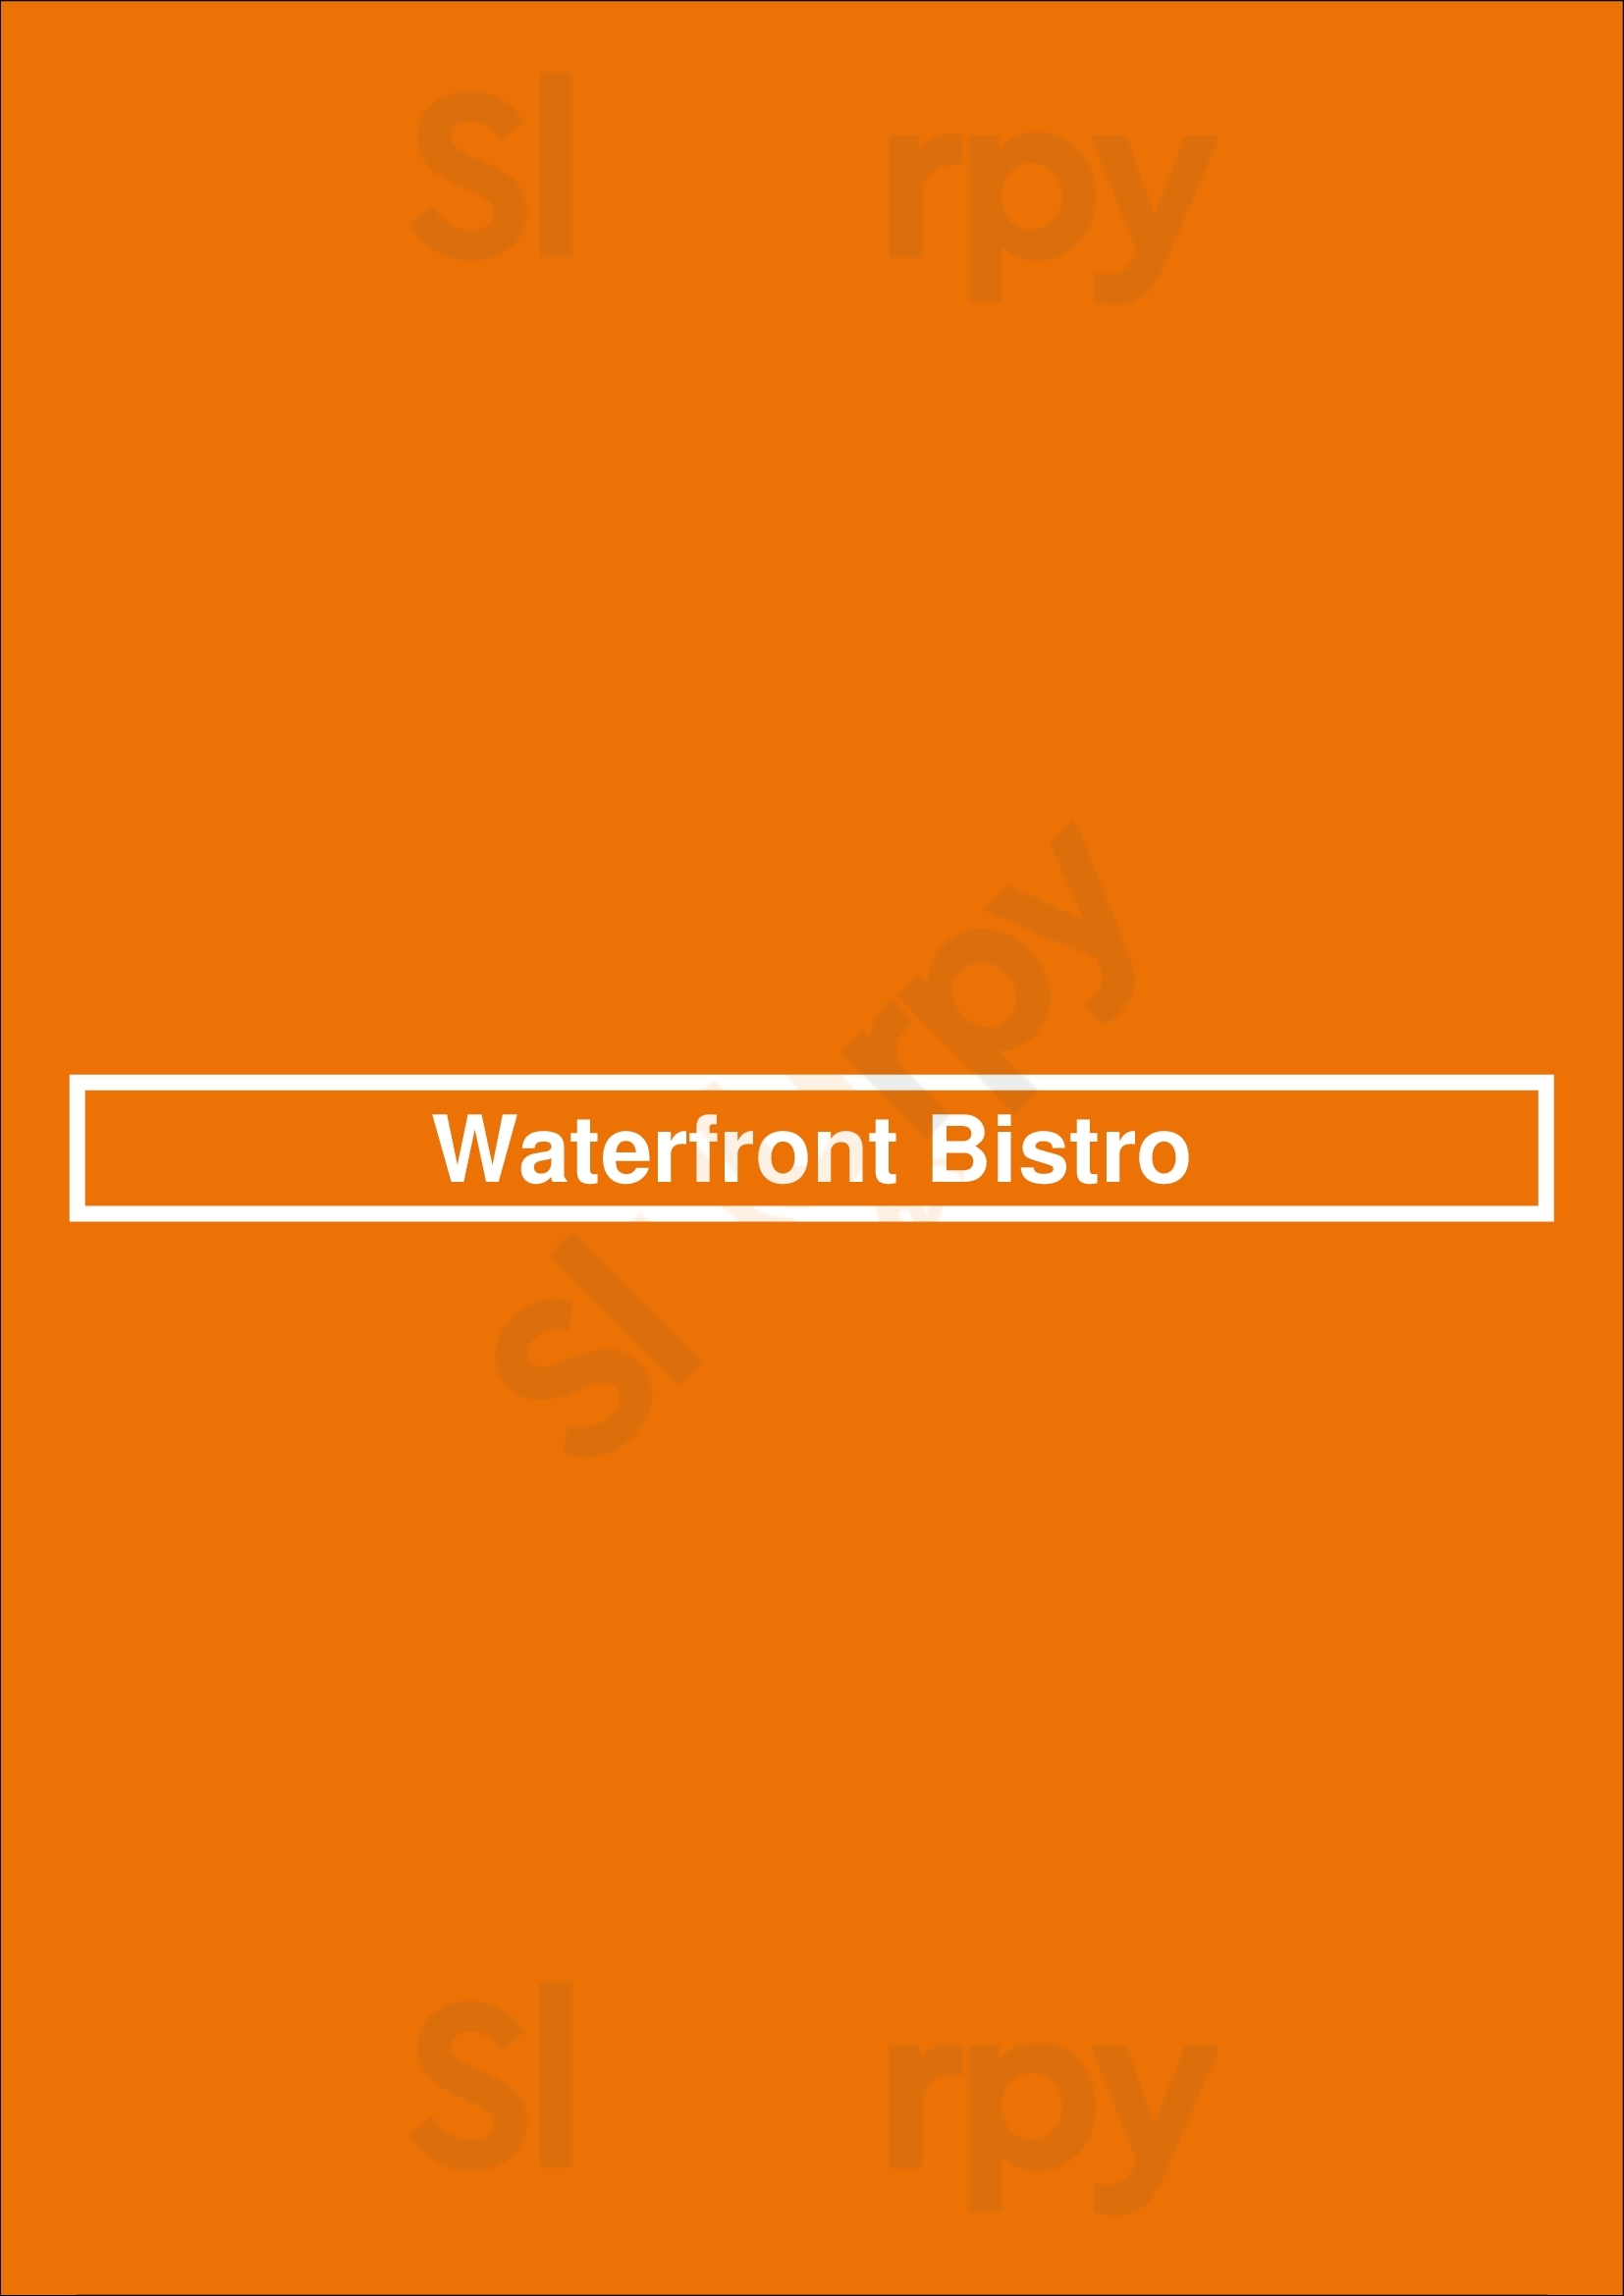 Waterfront Bistro Dun Laoghaire Menu - 1